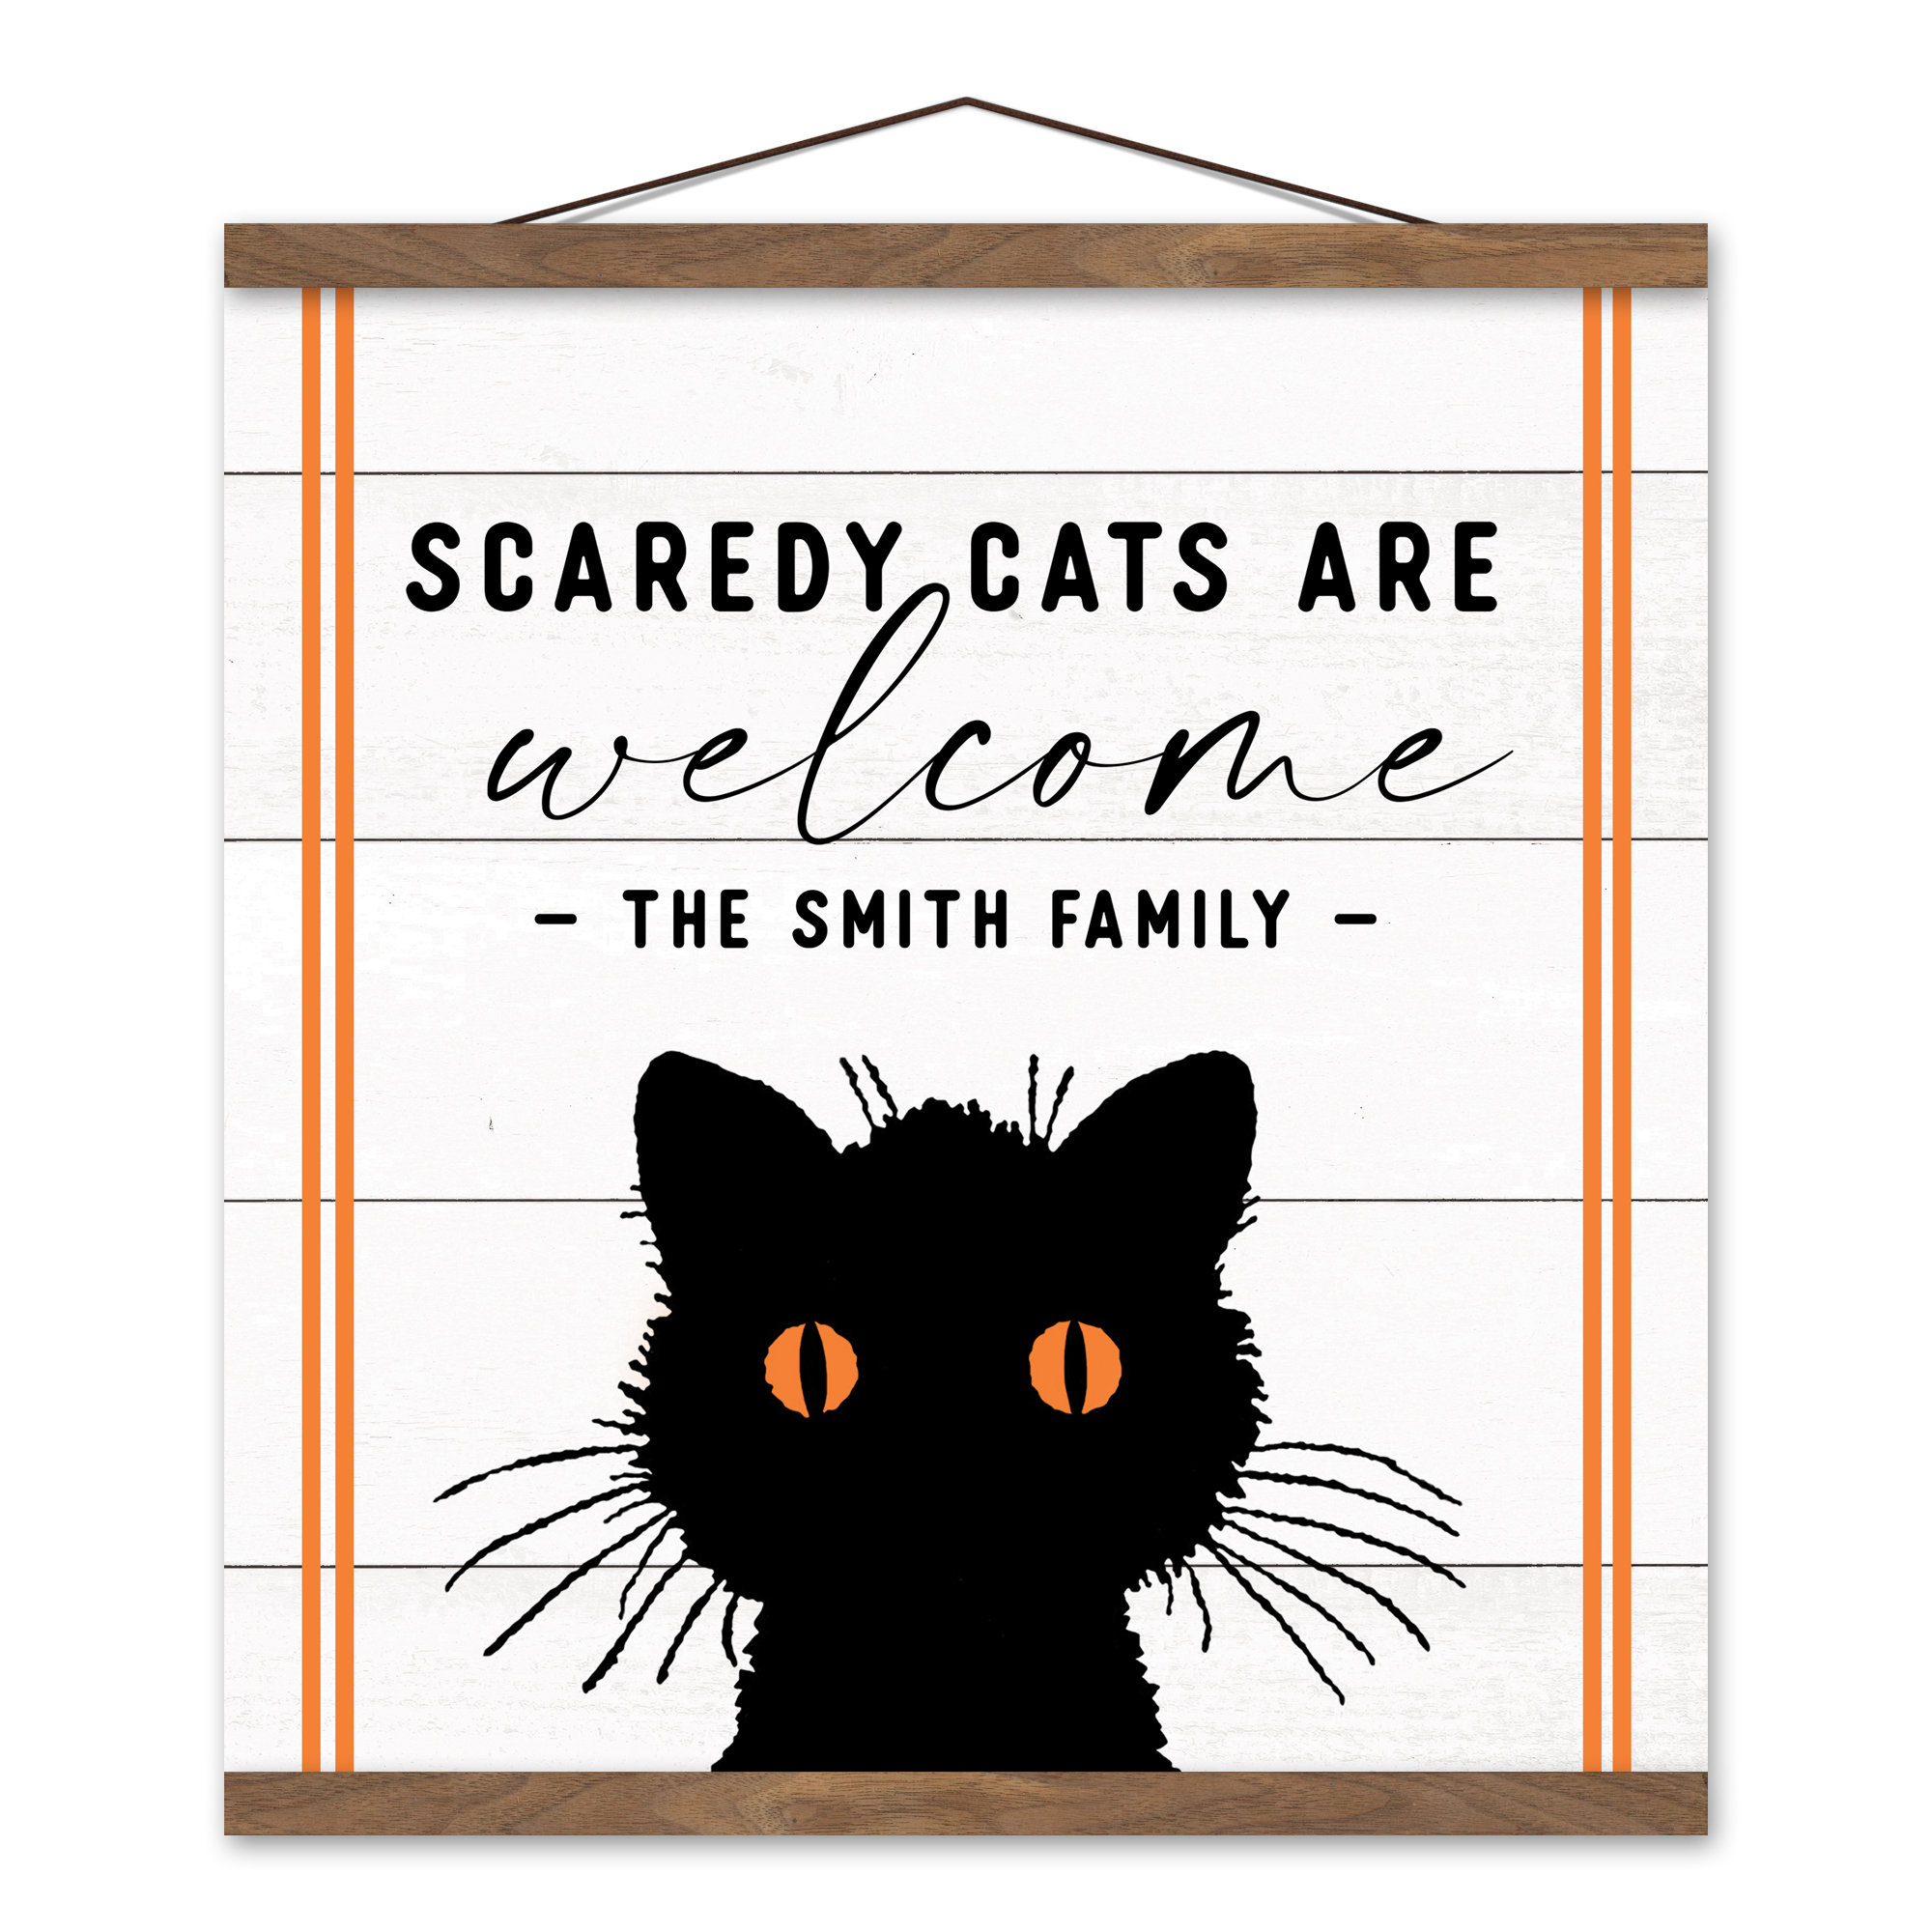 Scaredy Cats